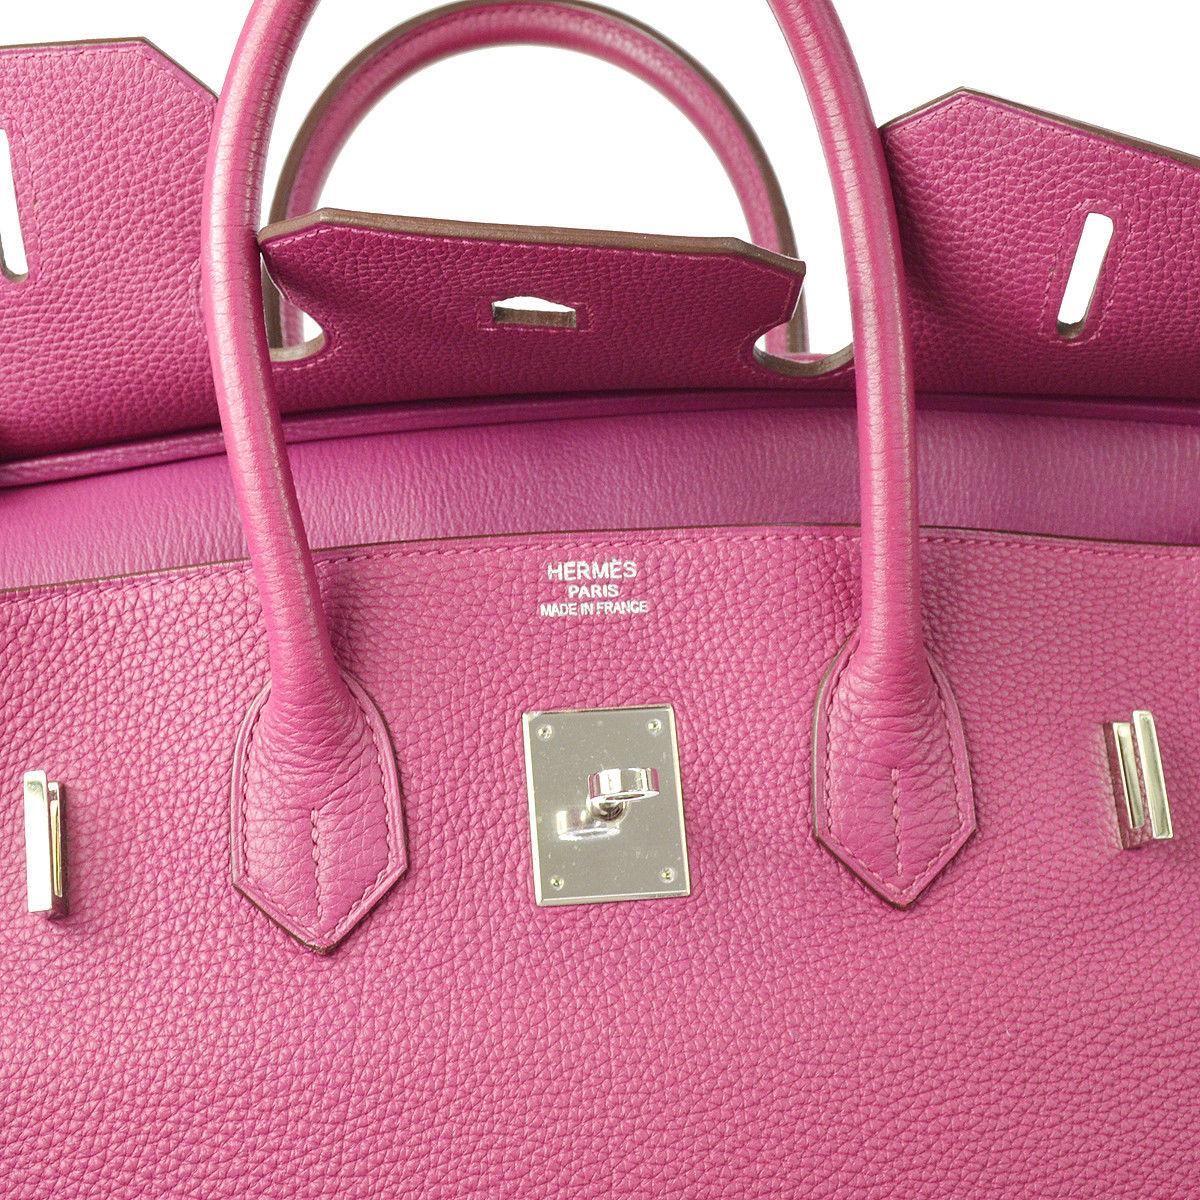 Women's Hermes Birkin 35 Pink Palladium Silver CarryAll Satchel Tote Shoulder Bag